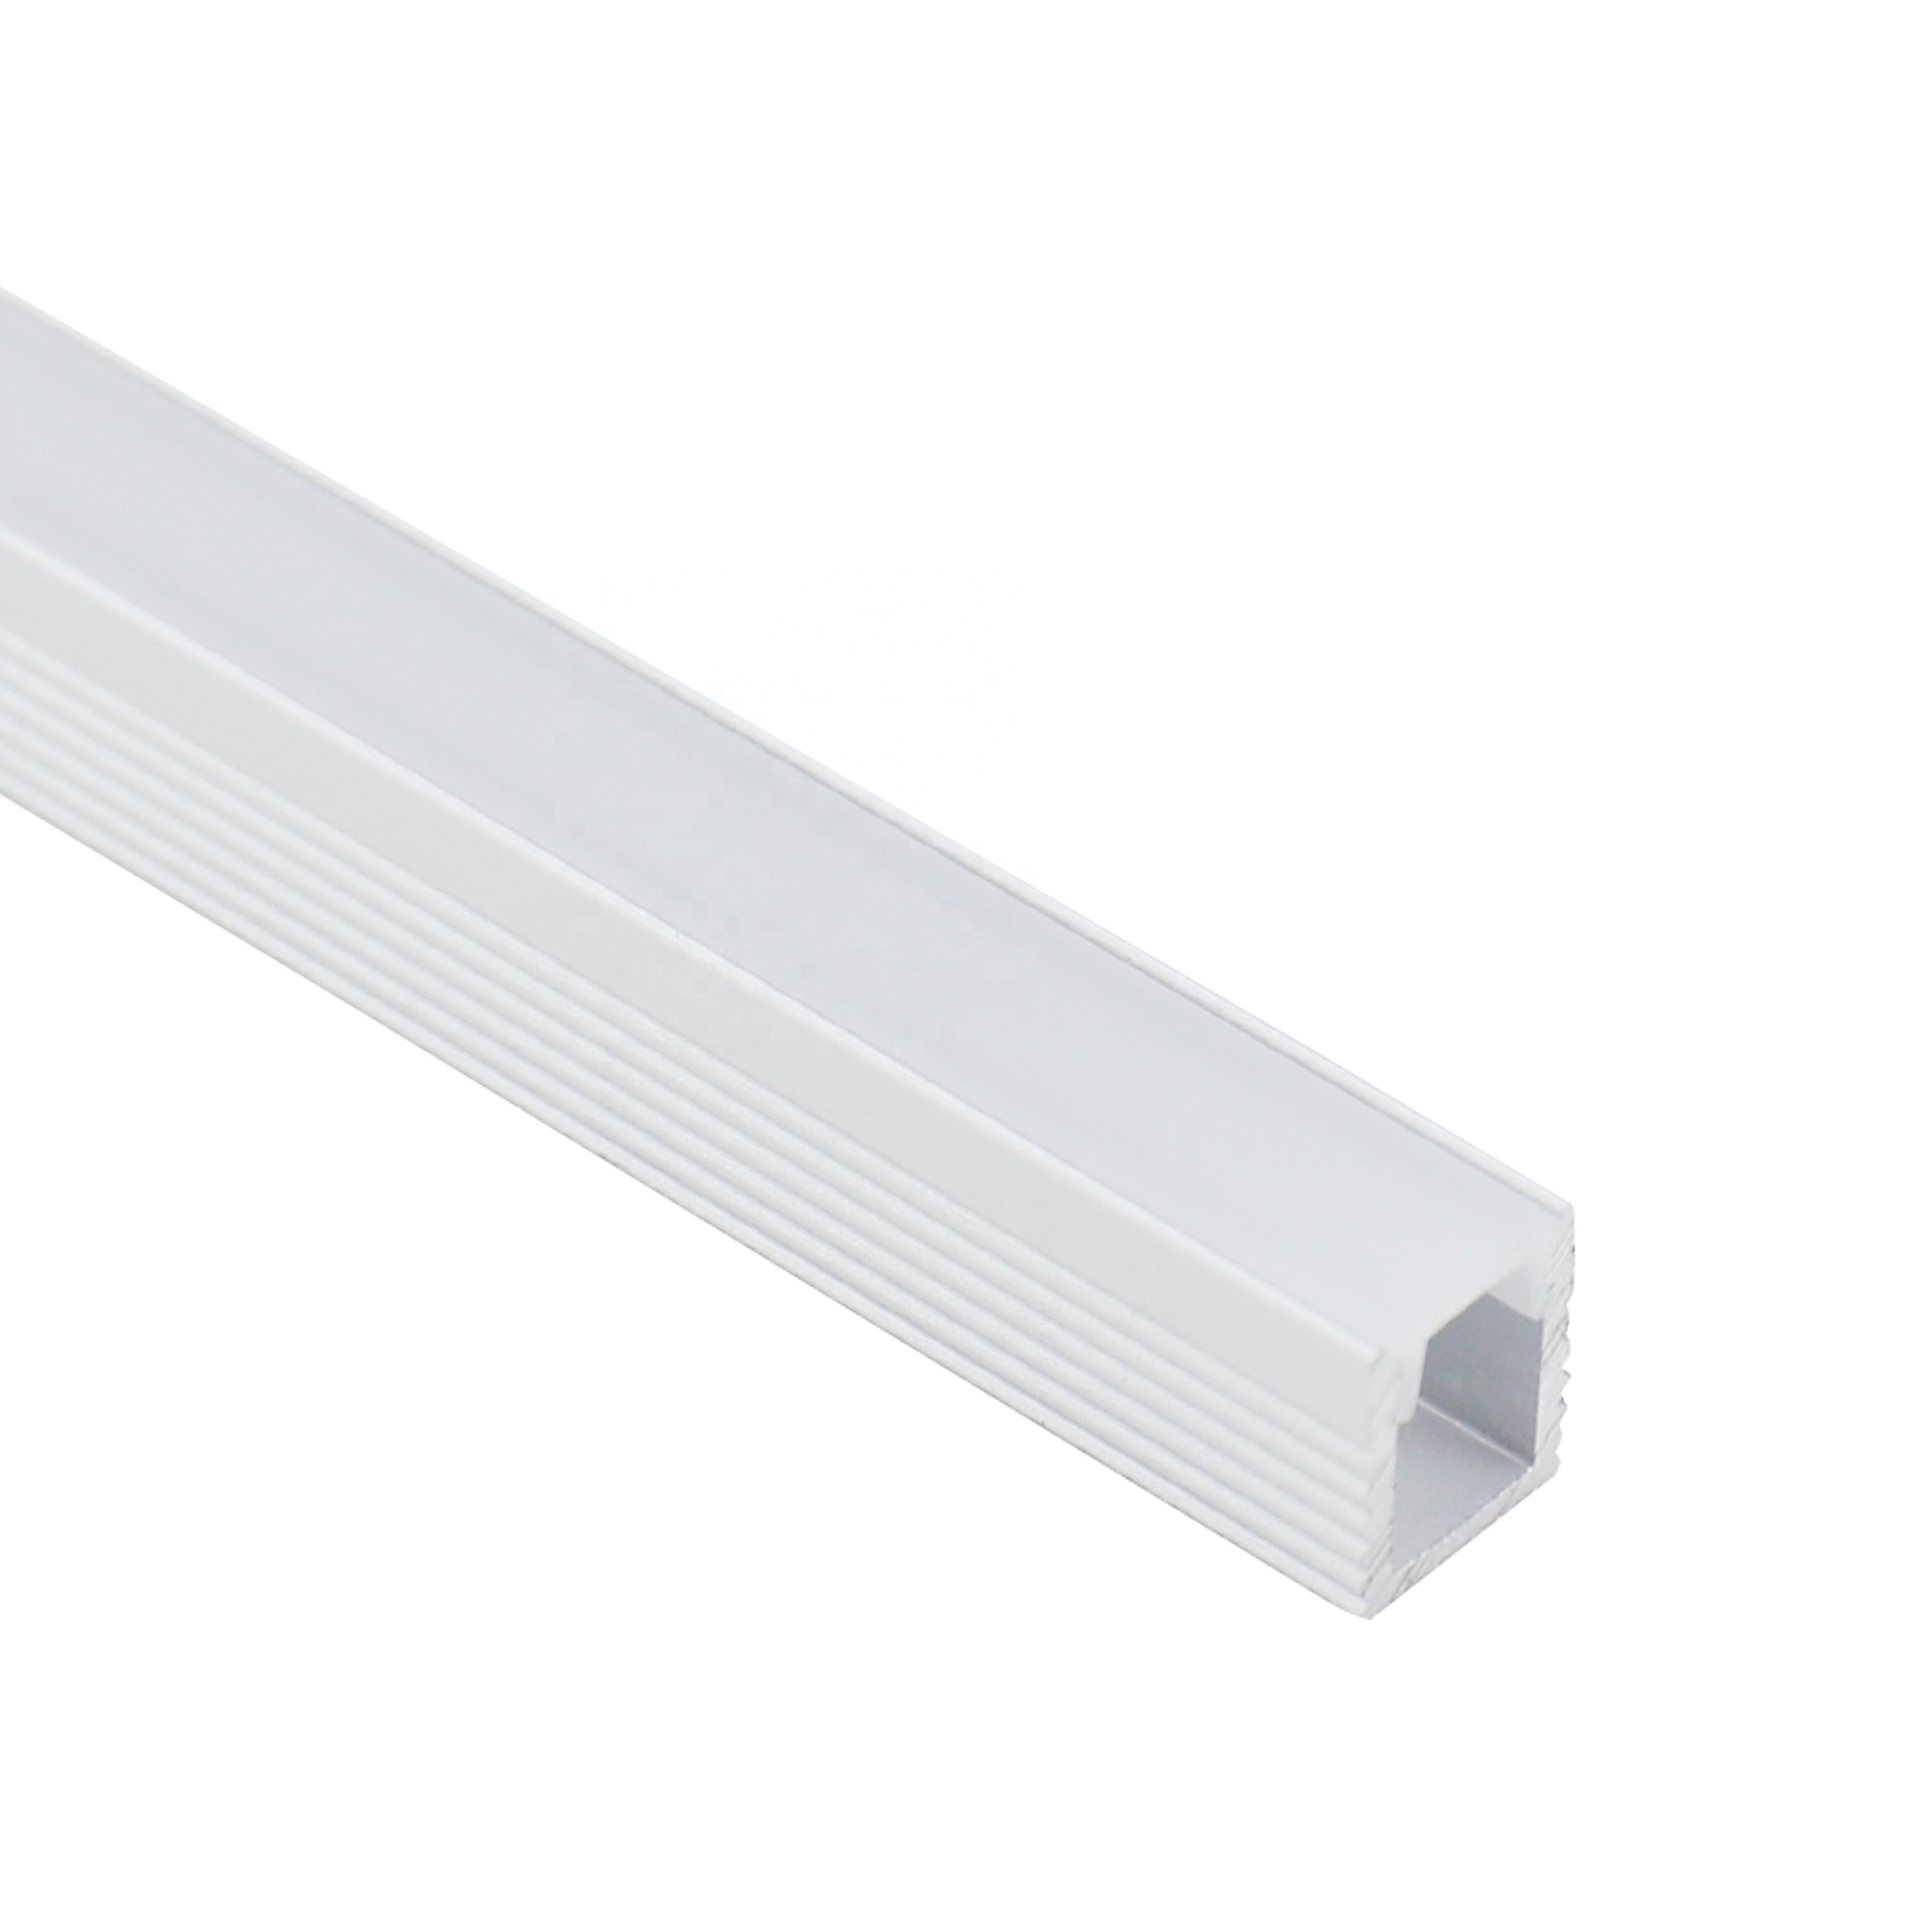 W8xH9mm super slim led linear light aluminum profile aluminum led strip profile for cabinet lighting